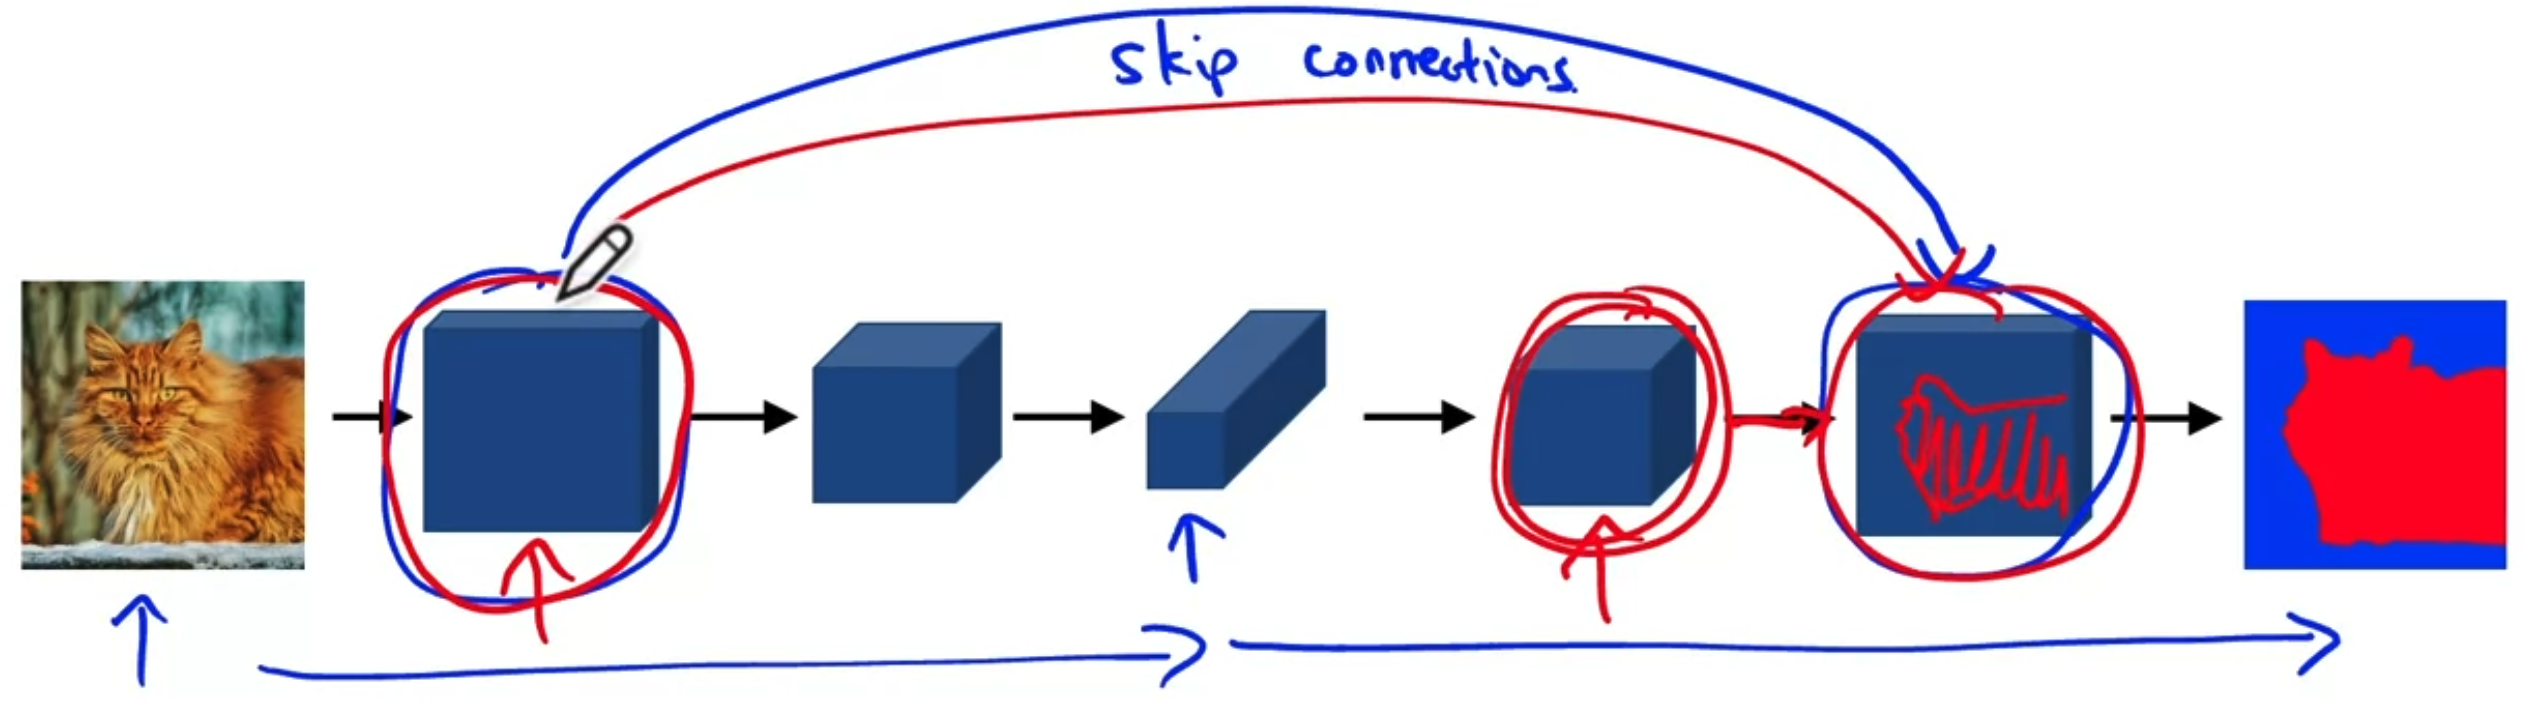 U-Net Architecture - Skip Connections